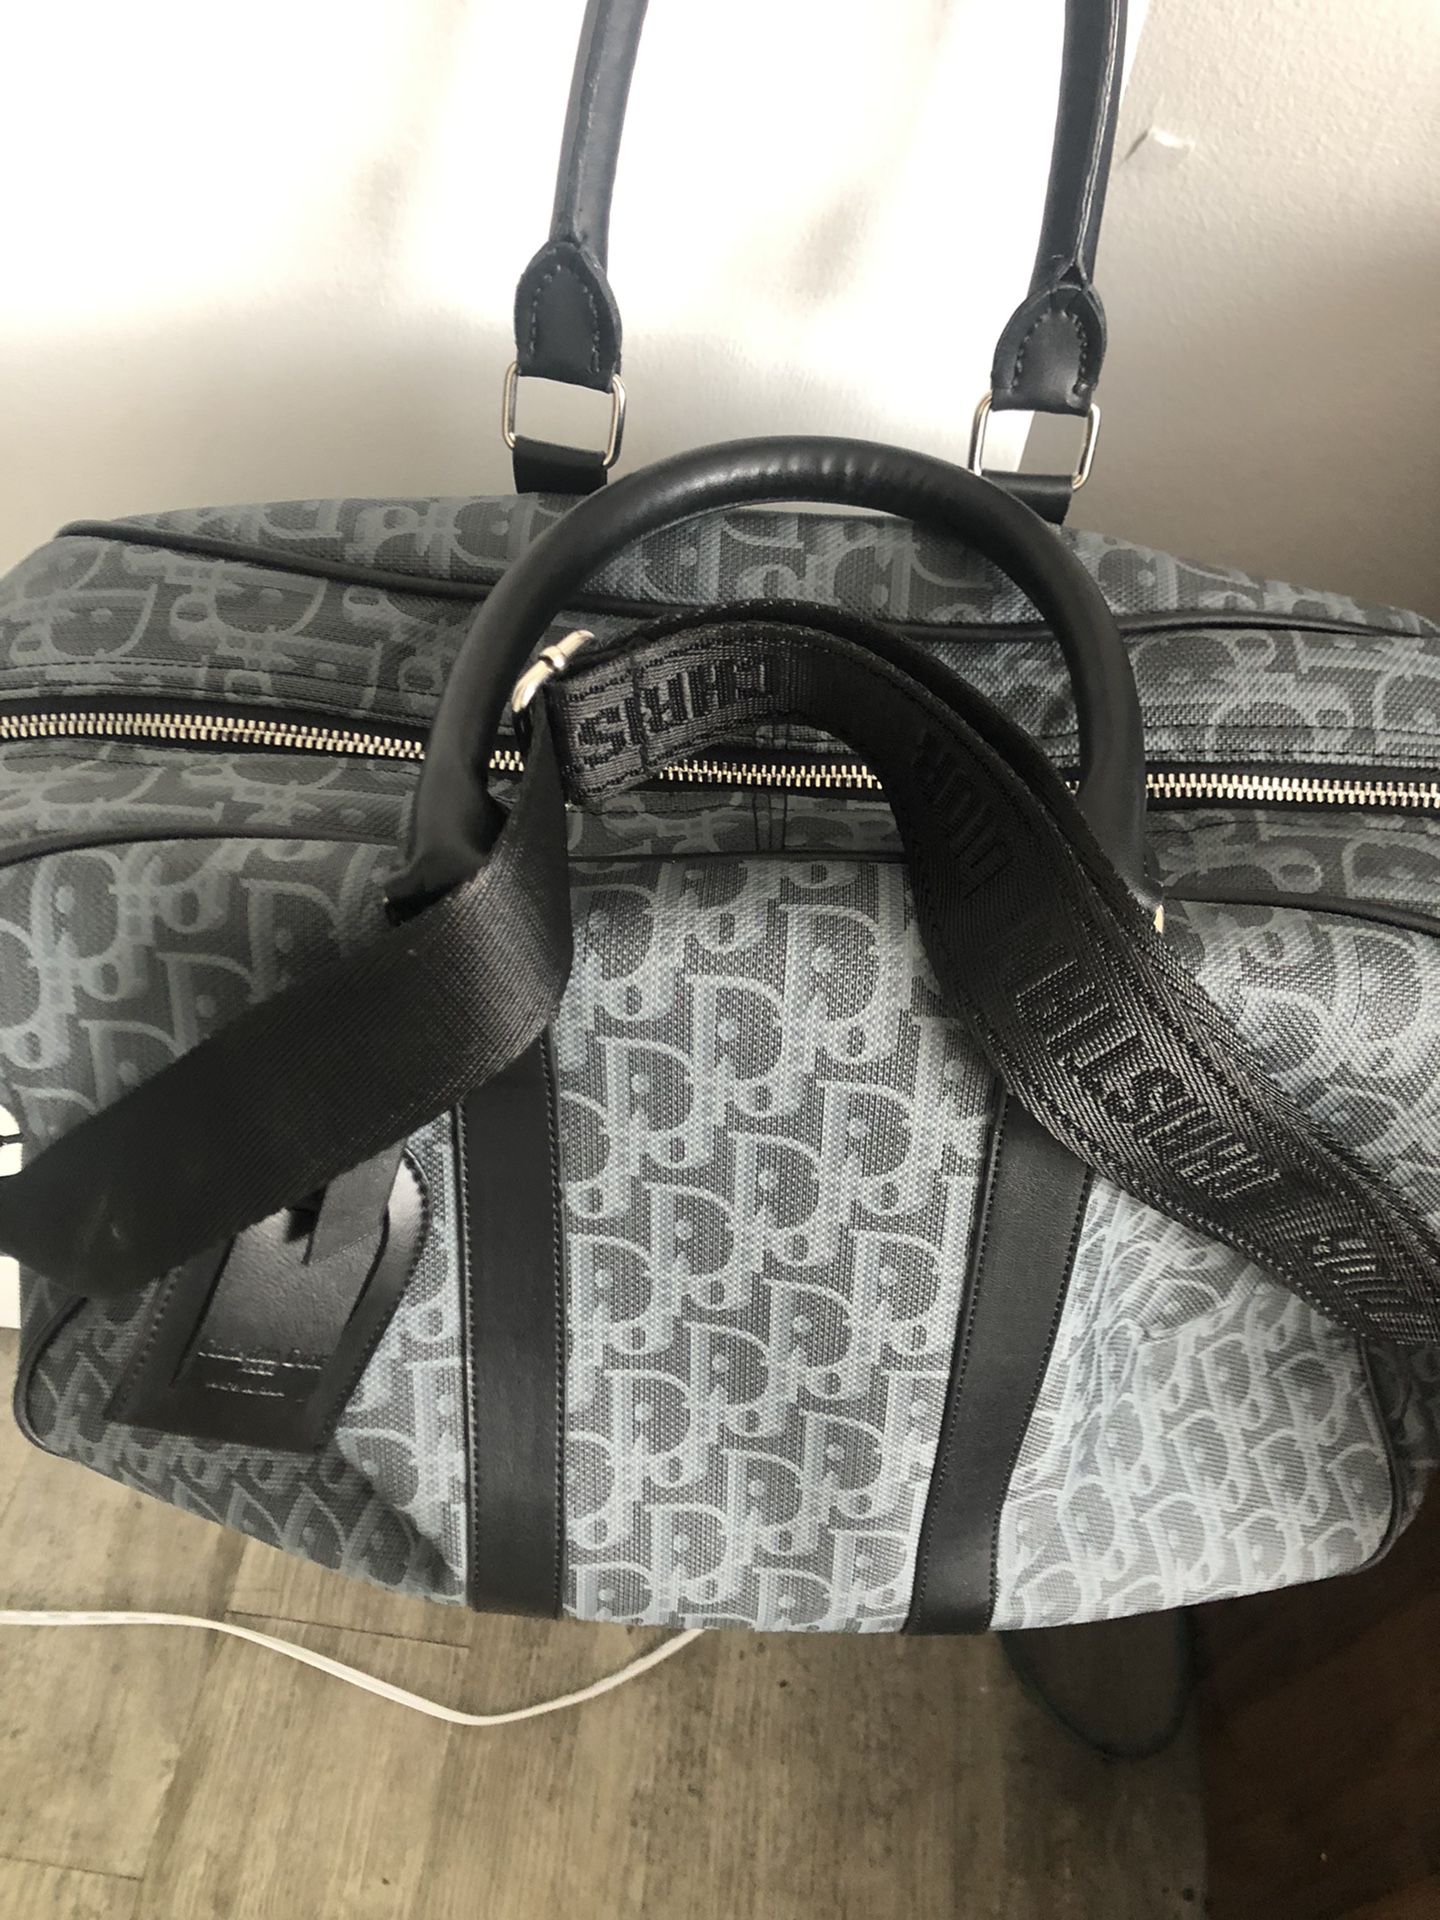 Christian Dior Bag 